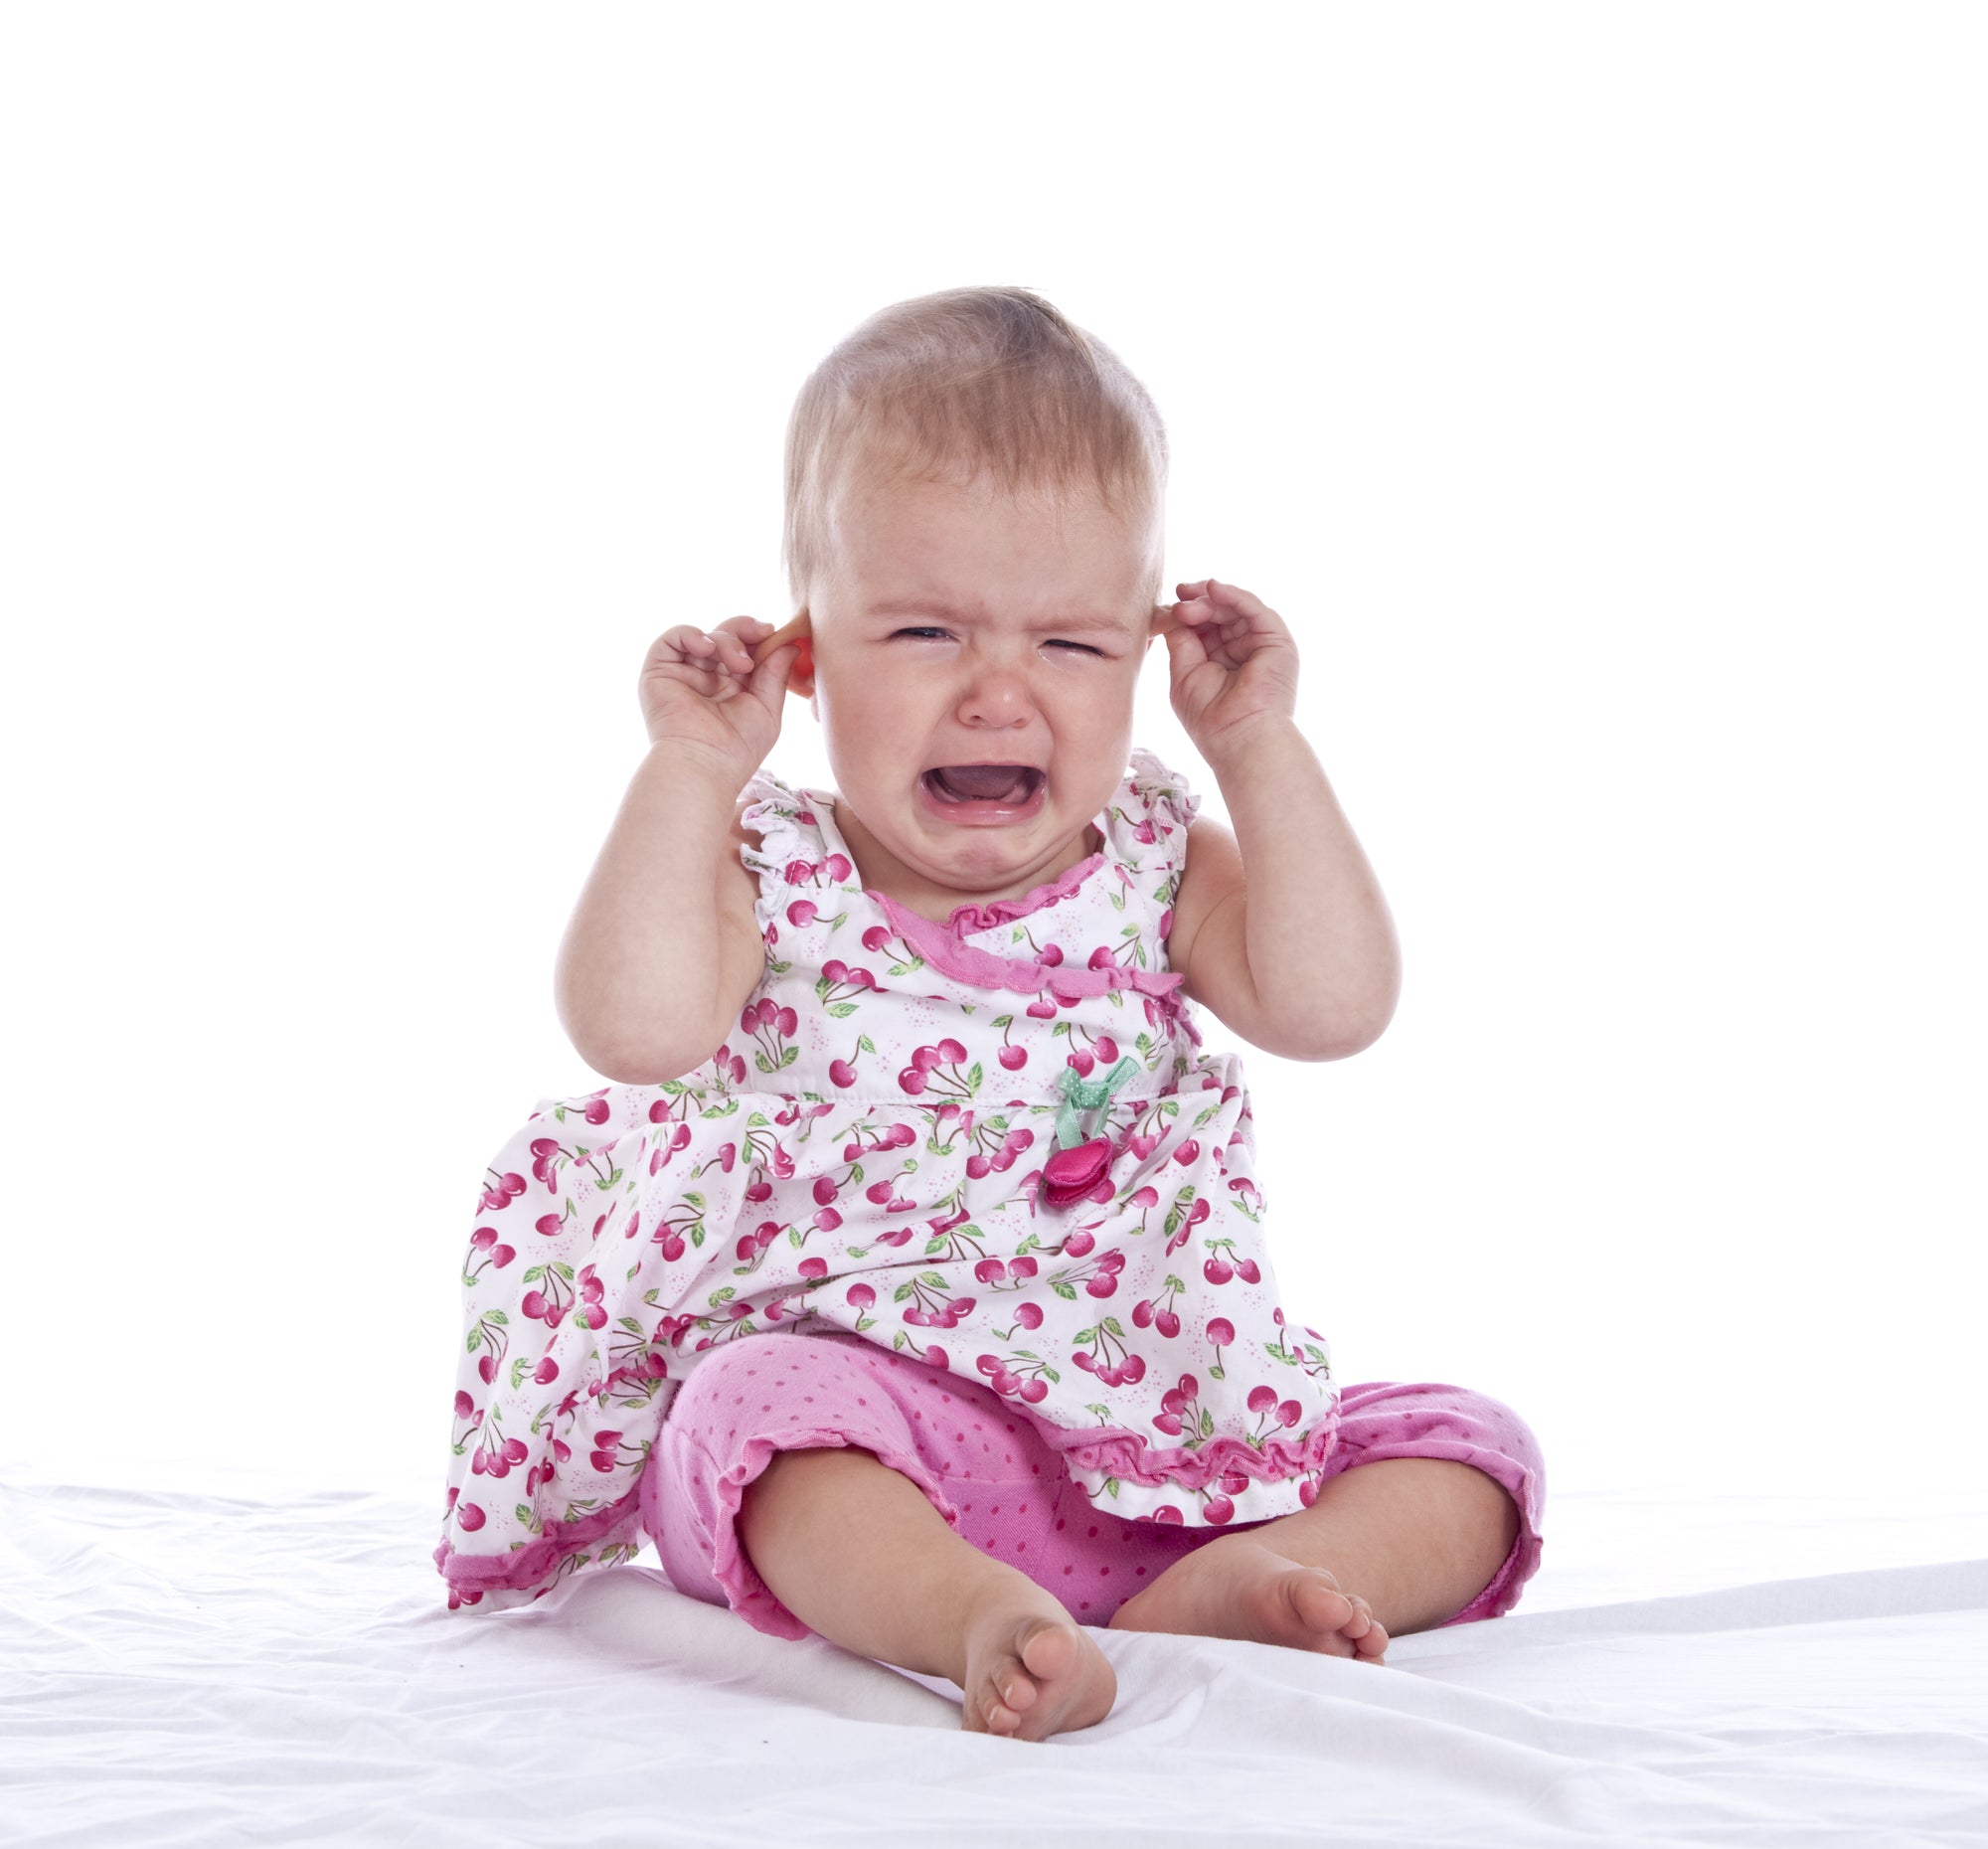 Childhood illness and reclaiming sleep